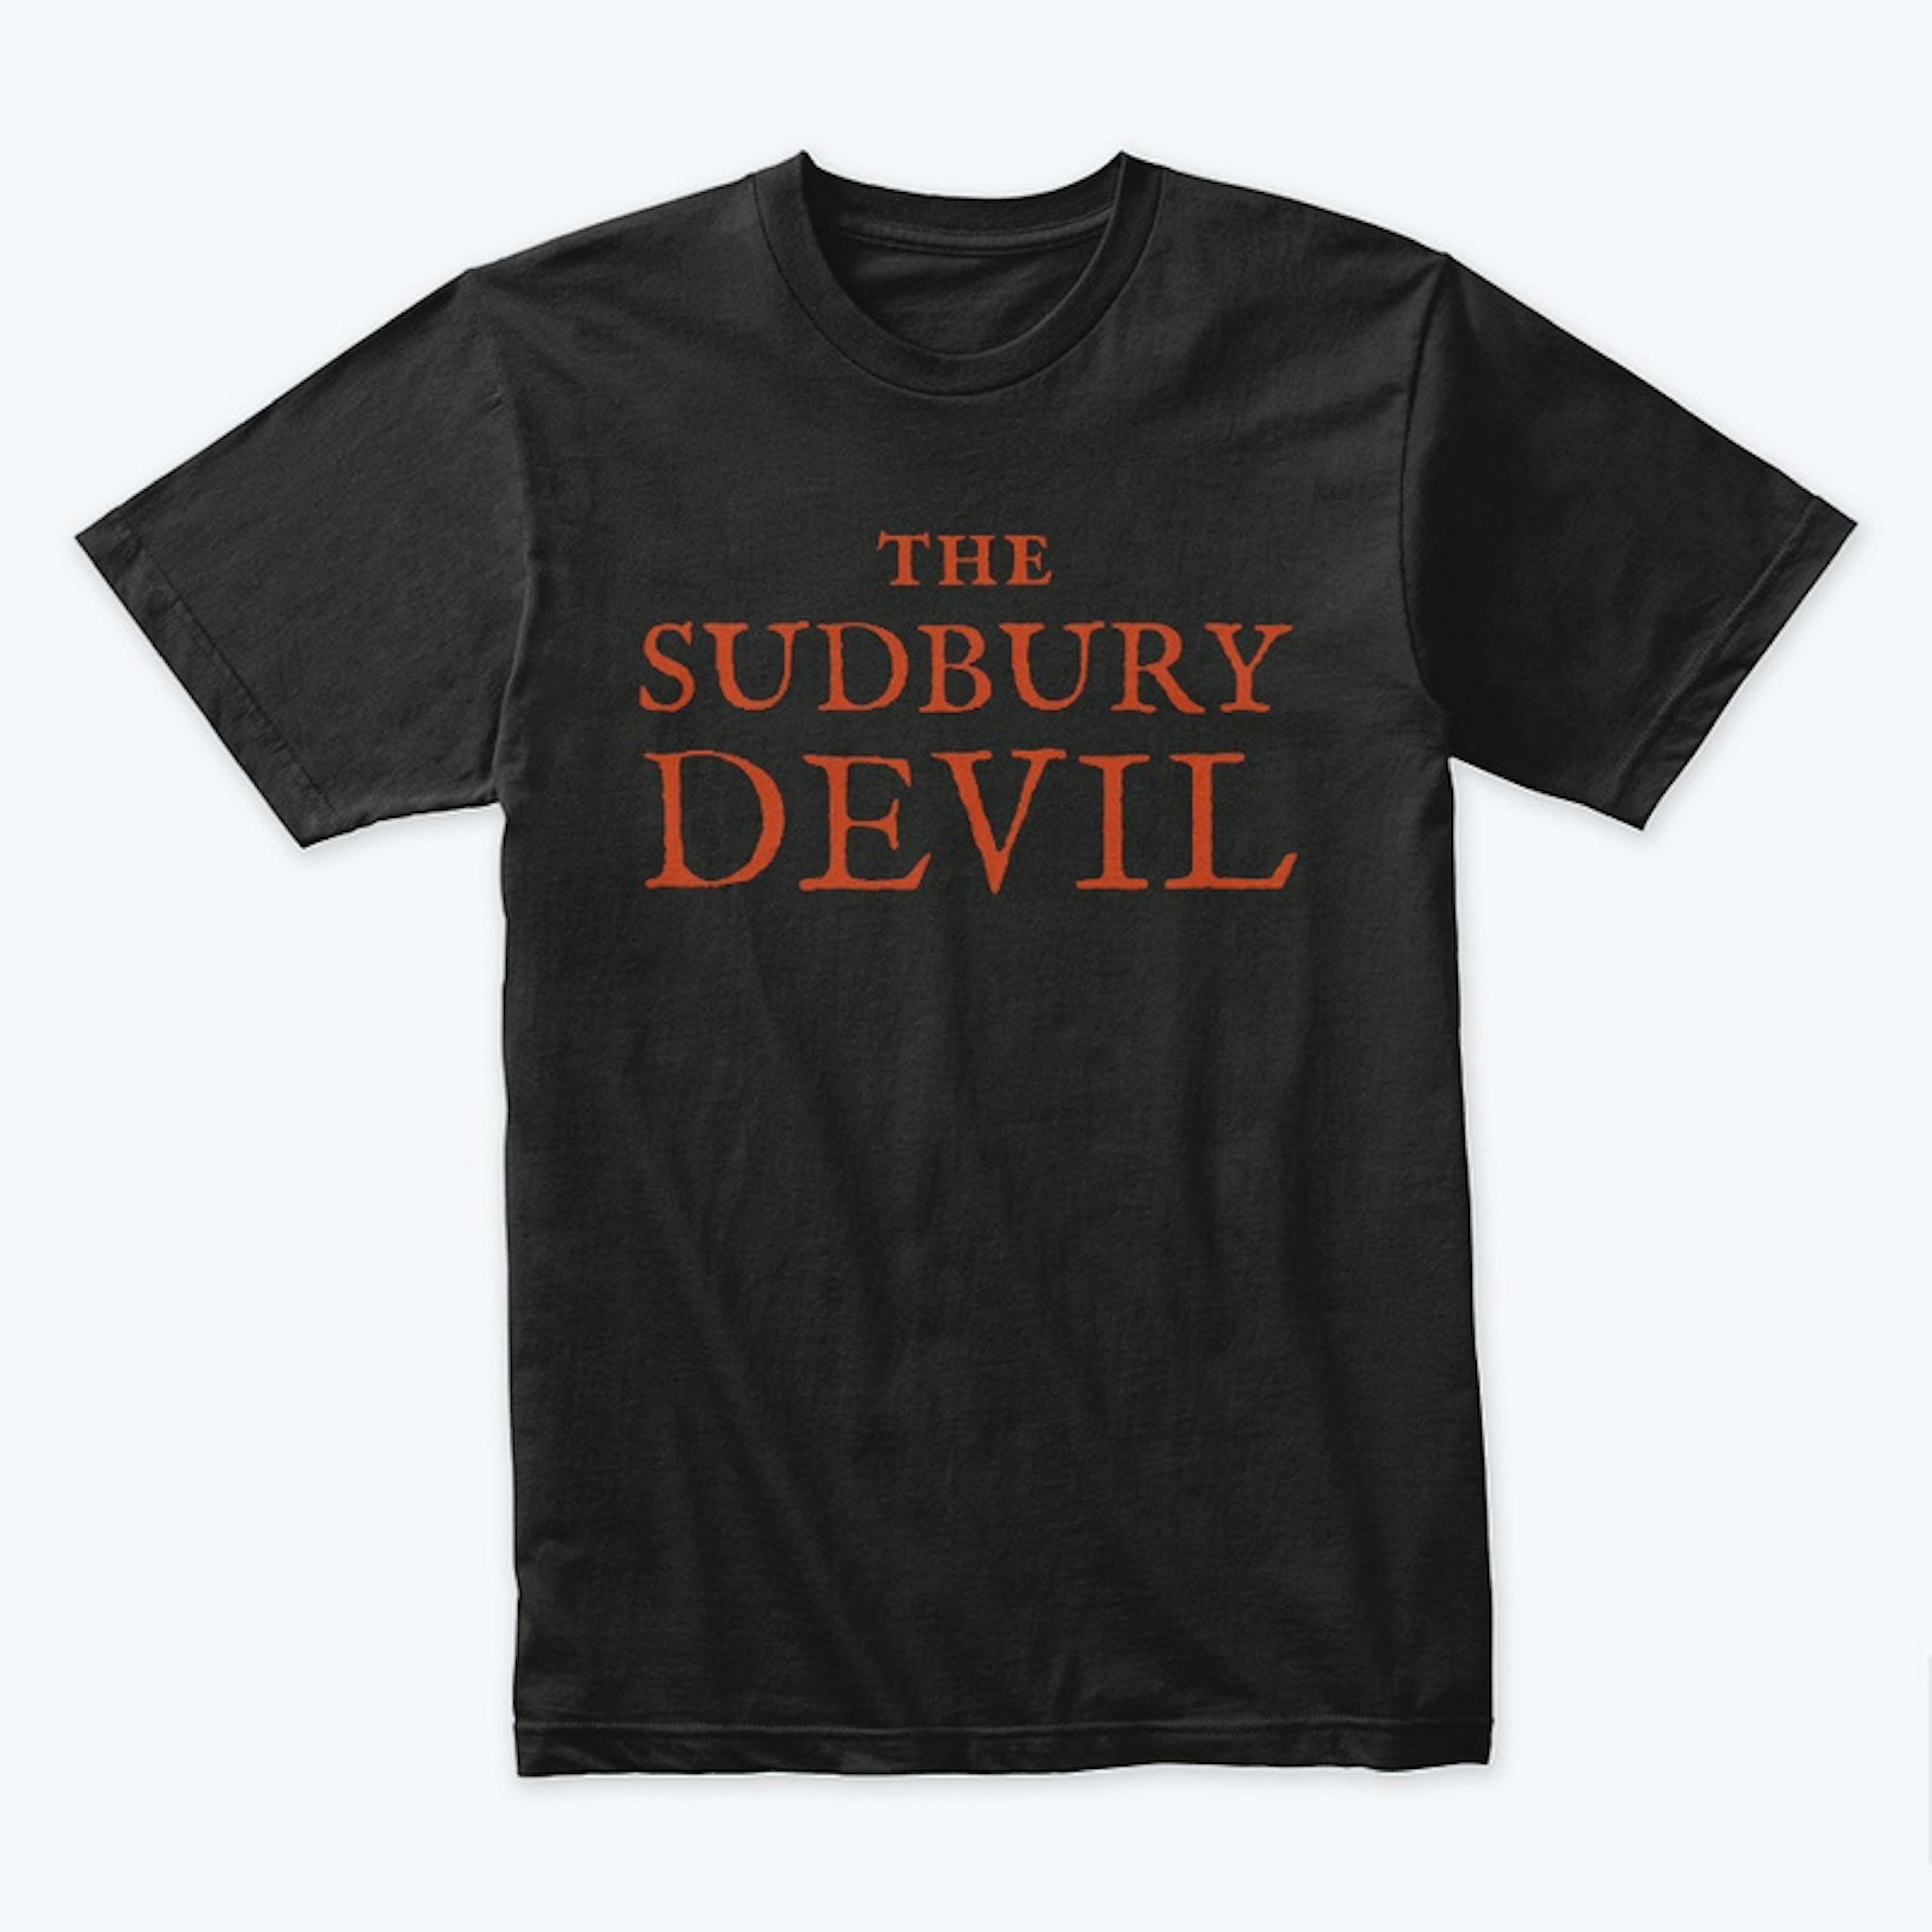 The Sudbury Devil